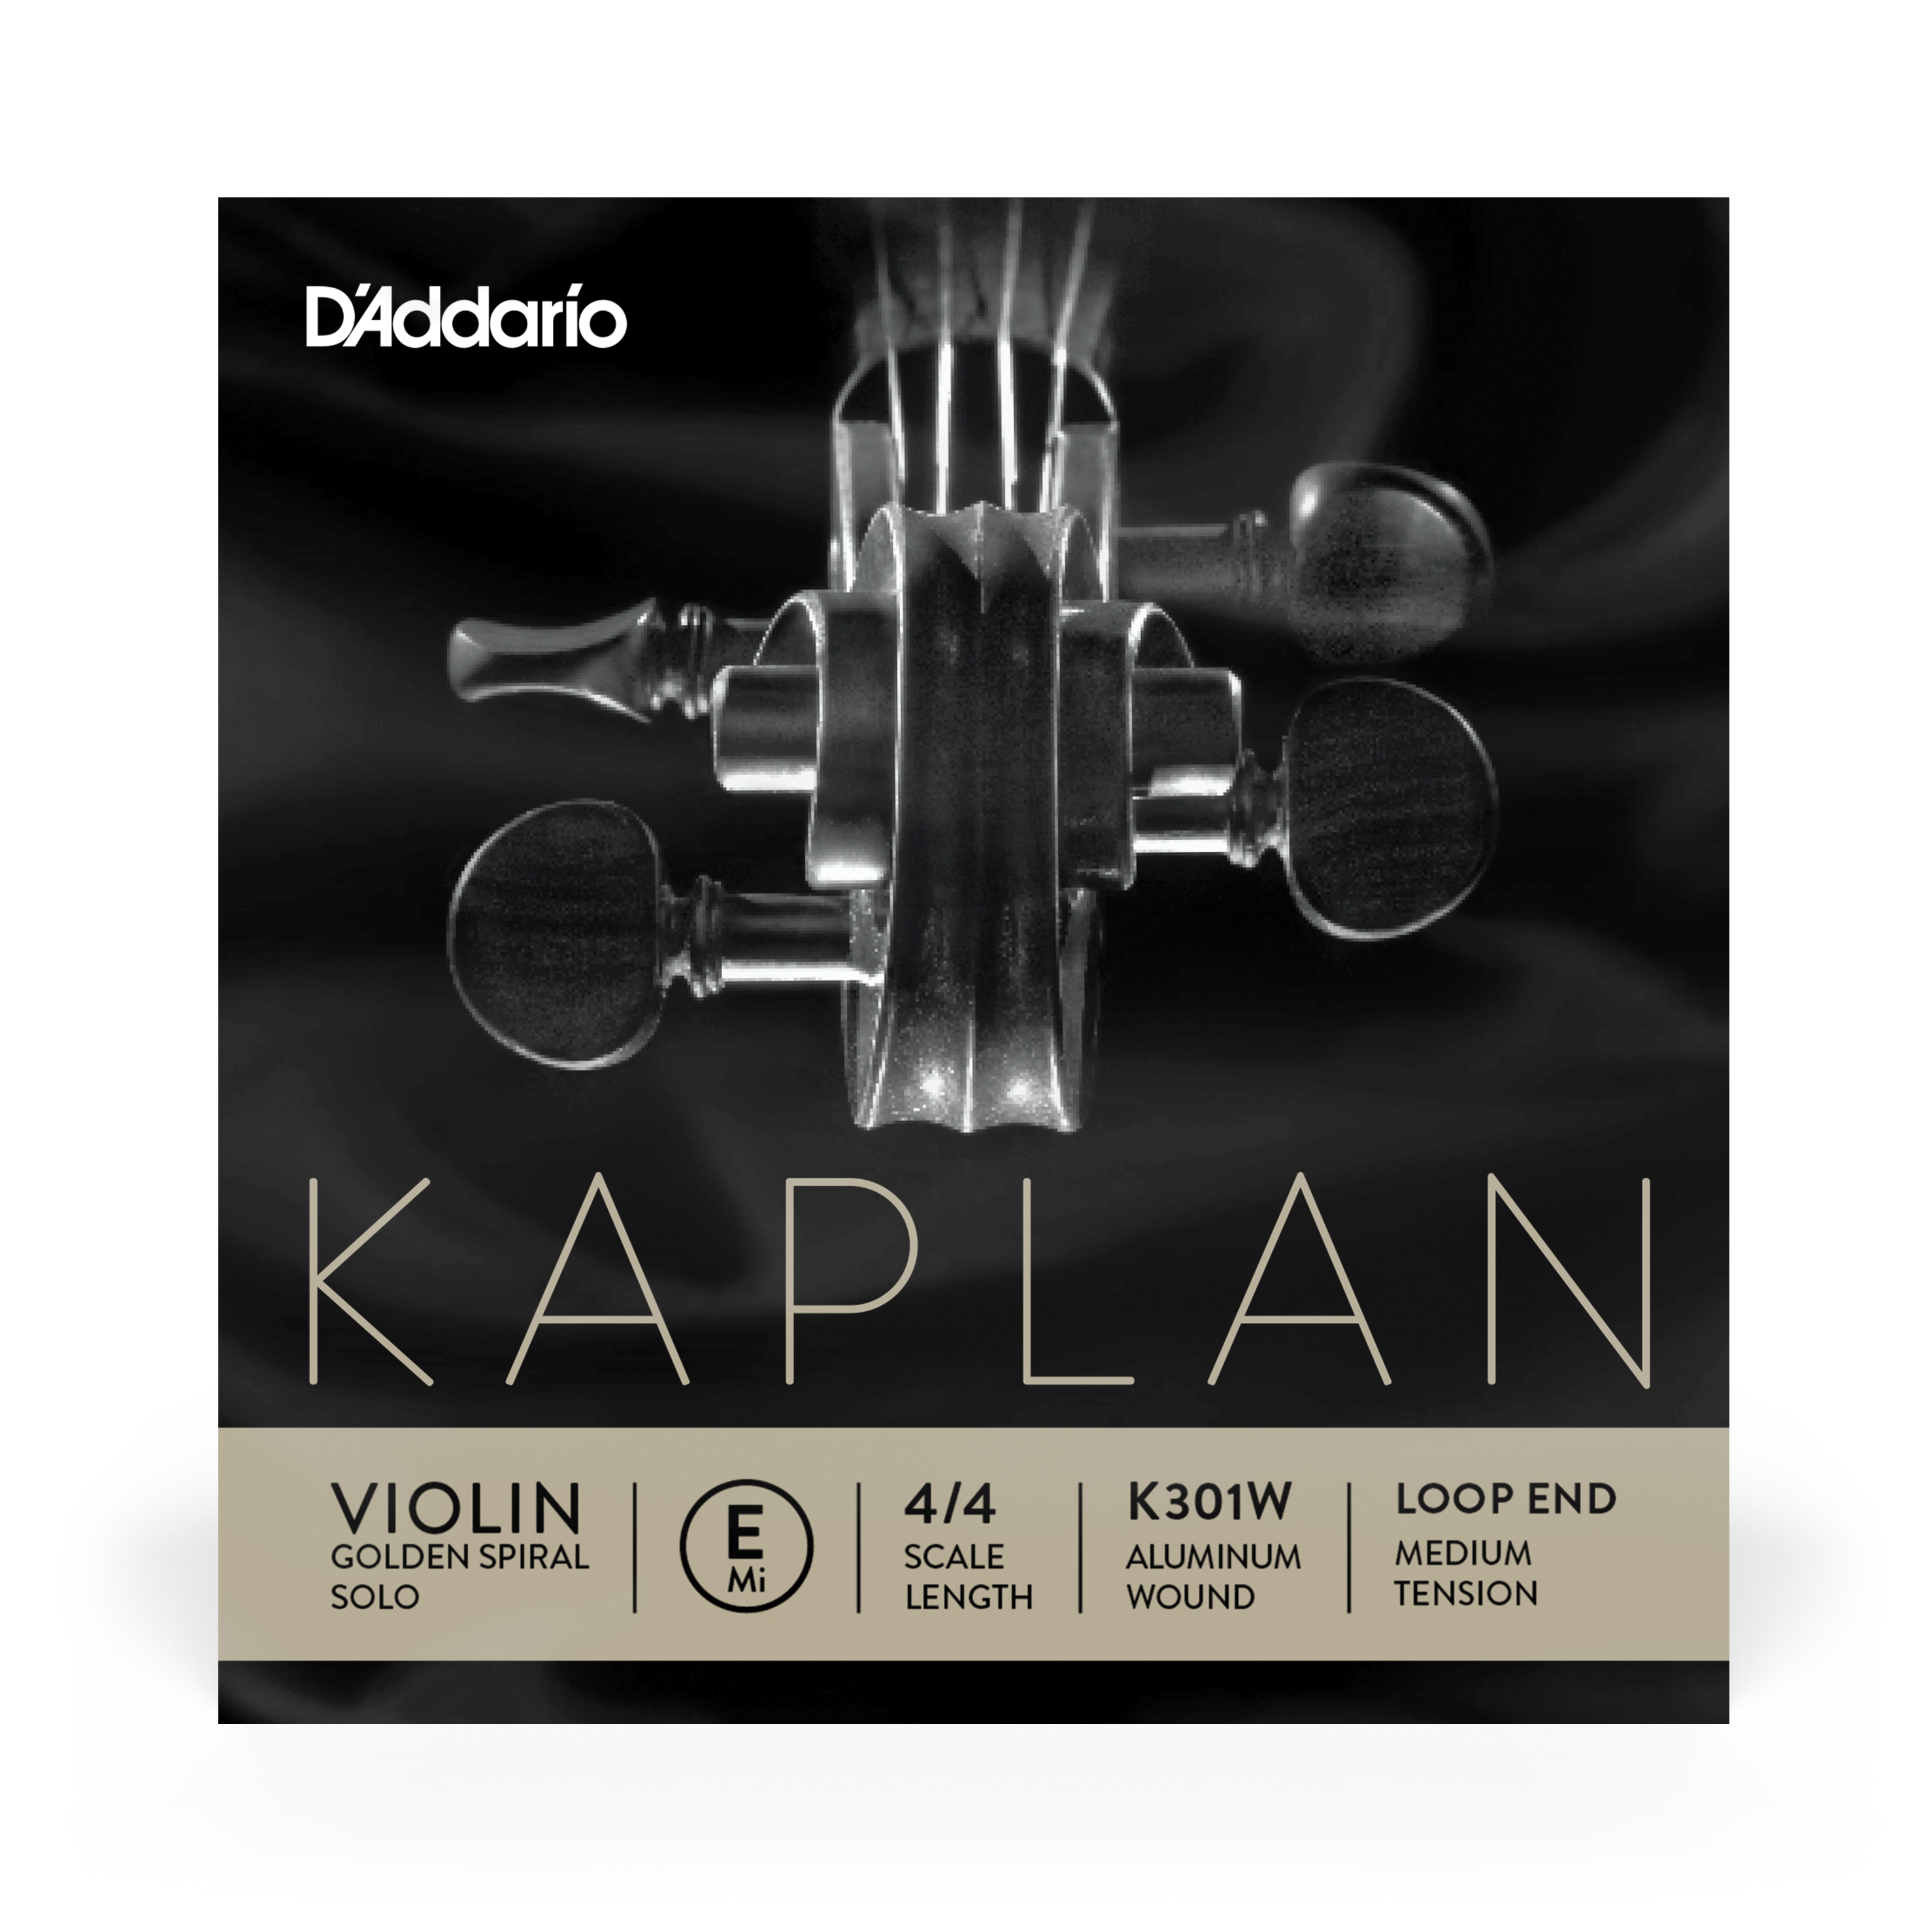 Daddario orchestral it K301w corda singola mi d'addario kaplan golden spiral solo per violino, senza pallino finale, scala 4/4, tensione media